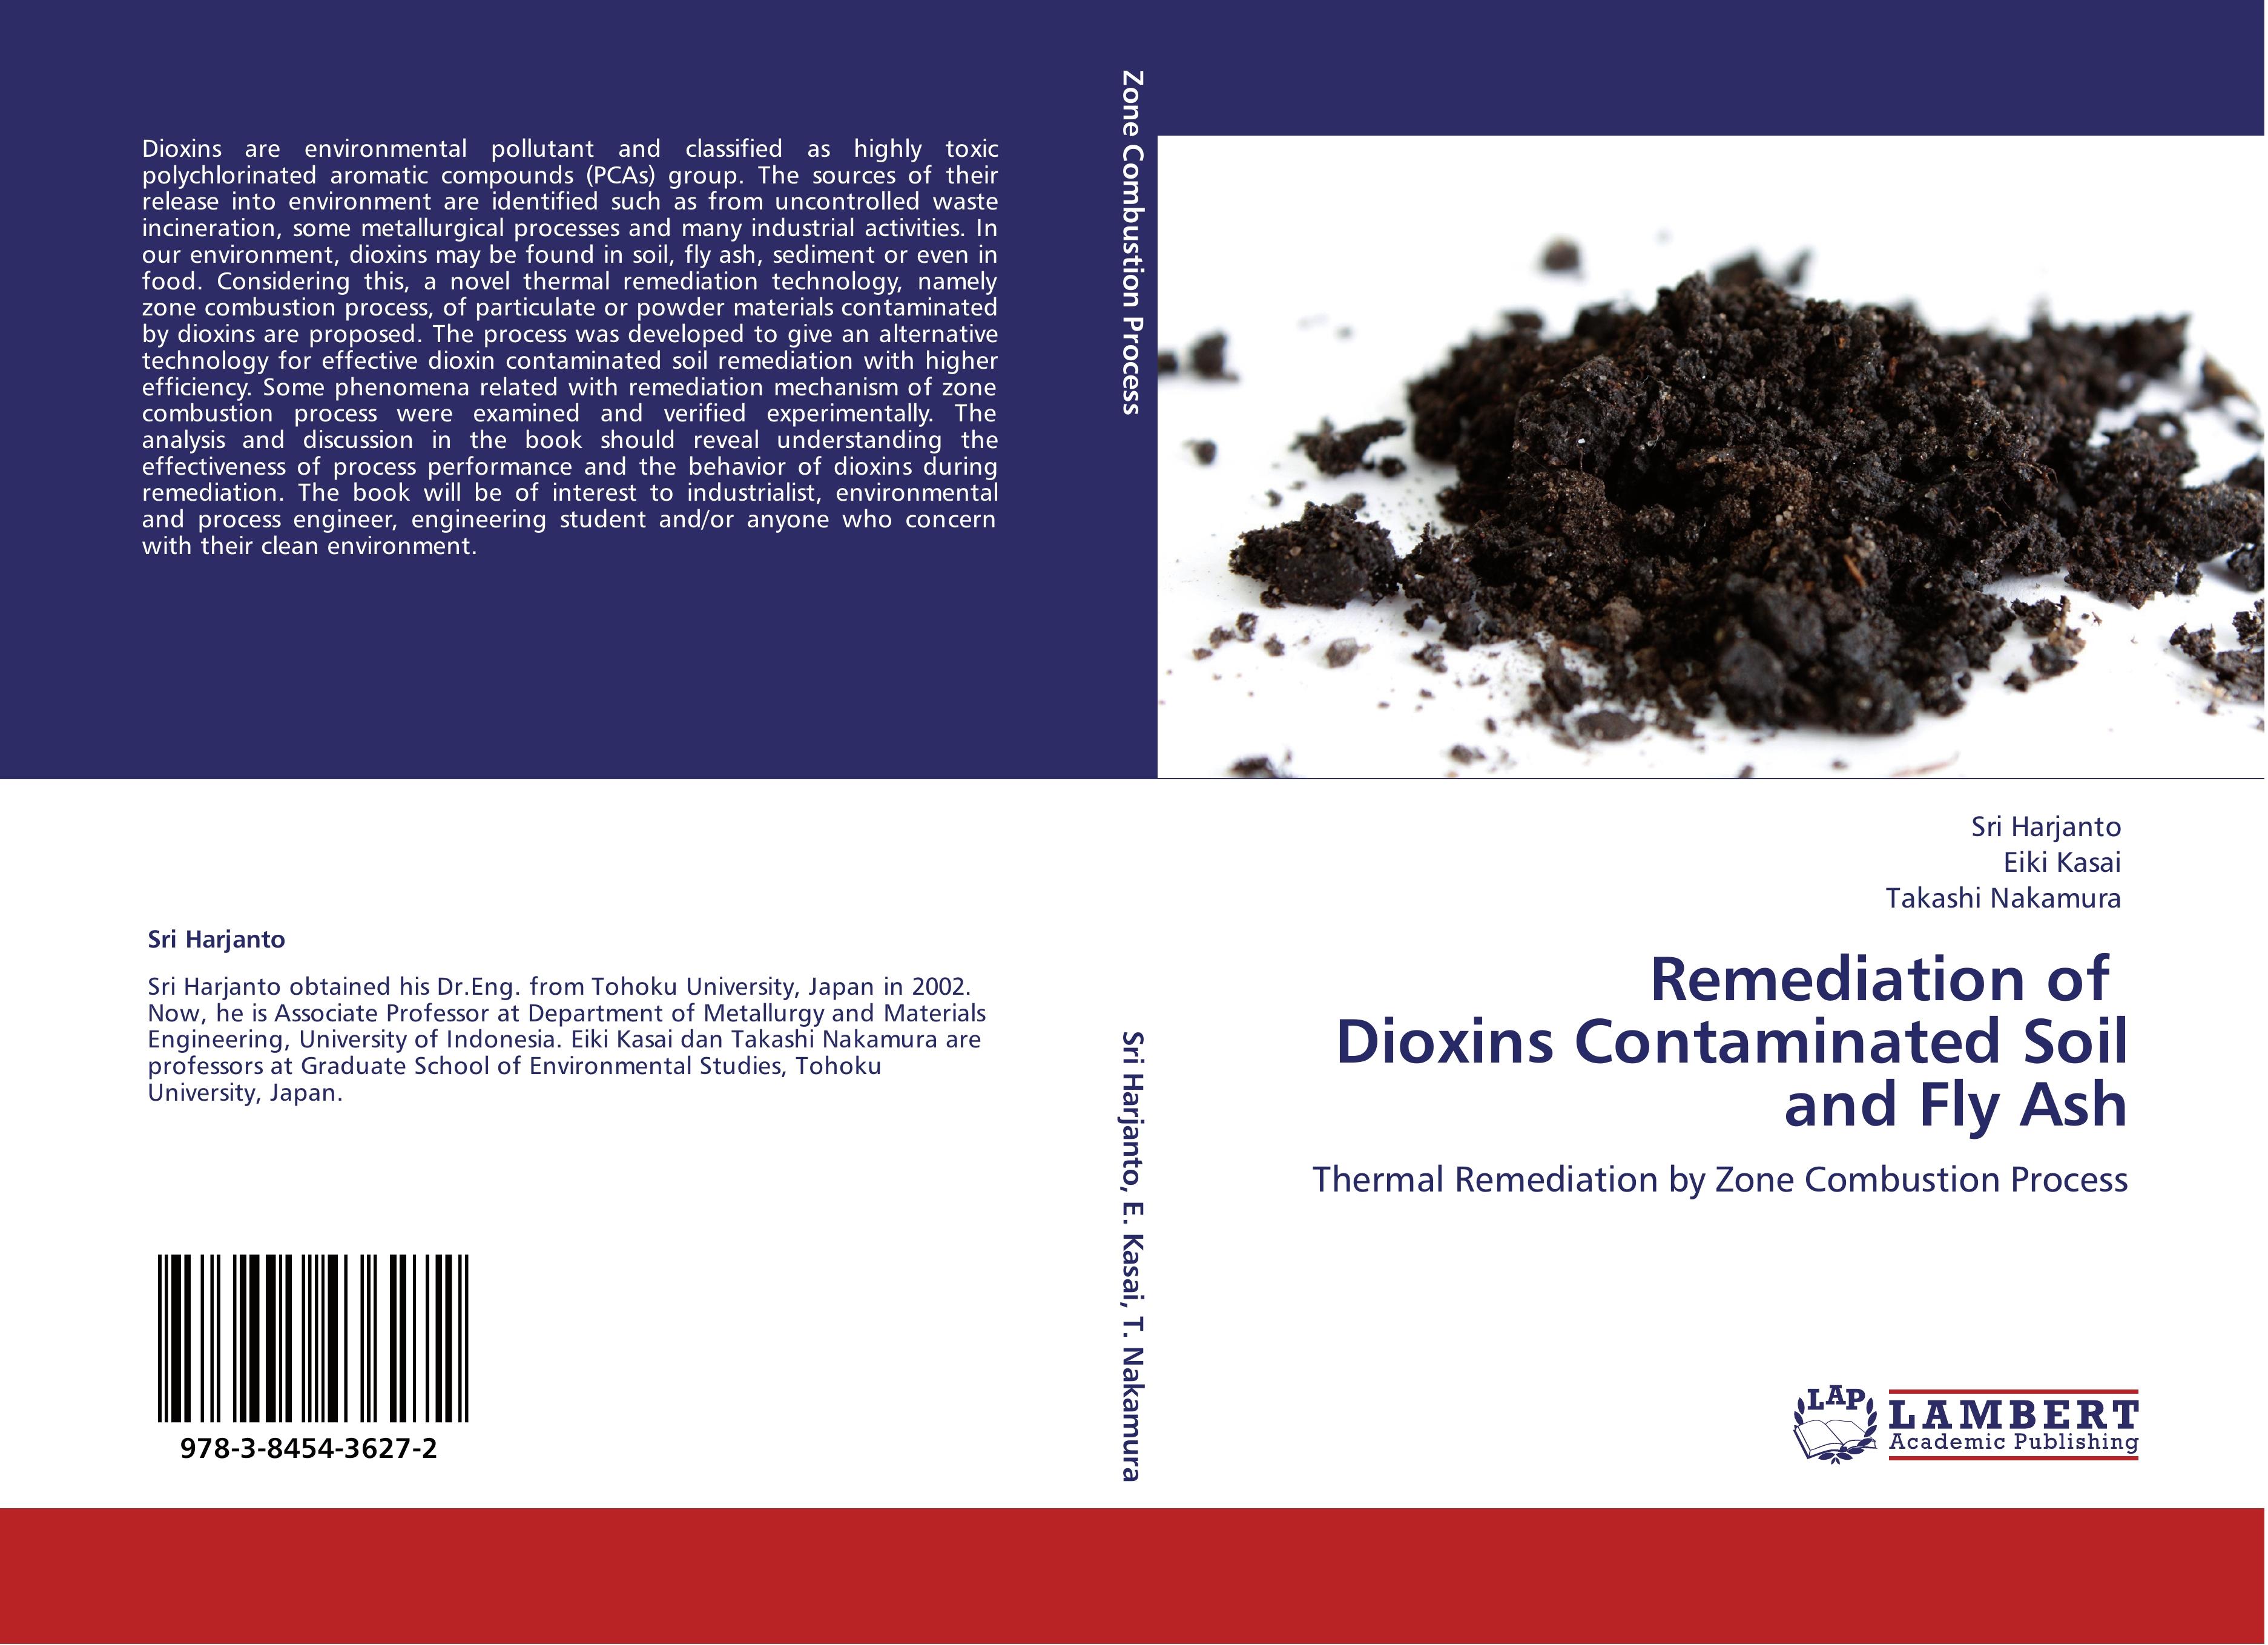 Remediation of Dioxins Contaminated Soil and Fly Ash - Sri Harjanto Eiki Kasai Takashi Nakamura